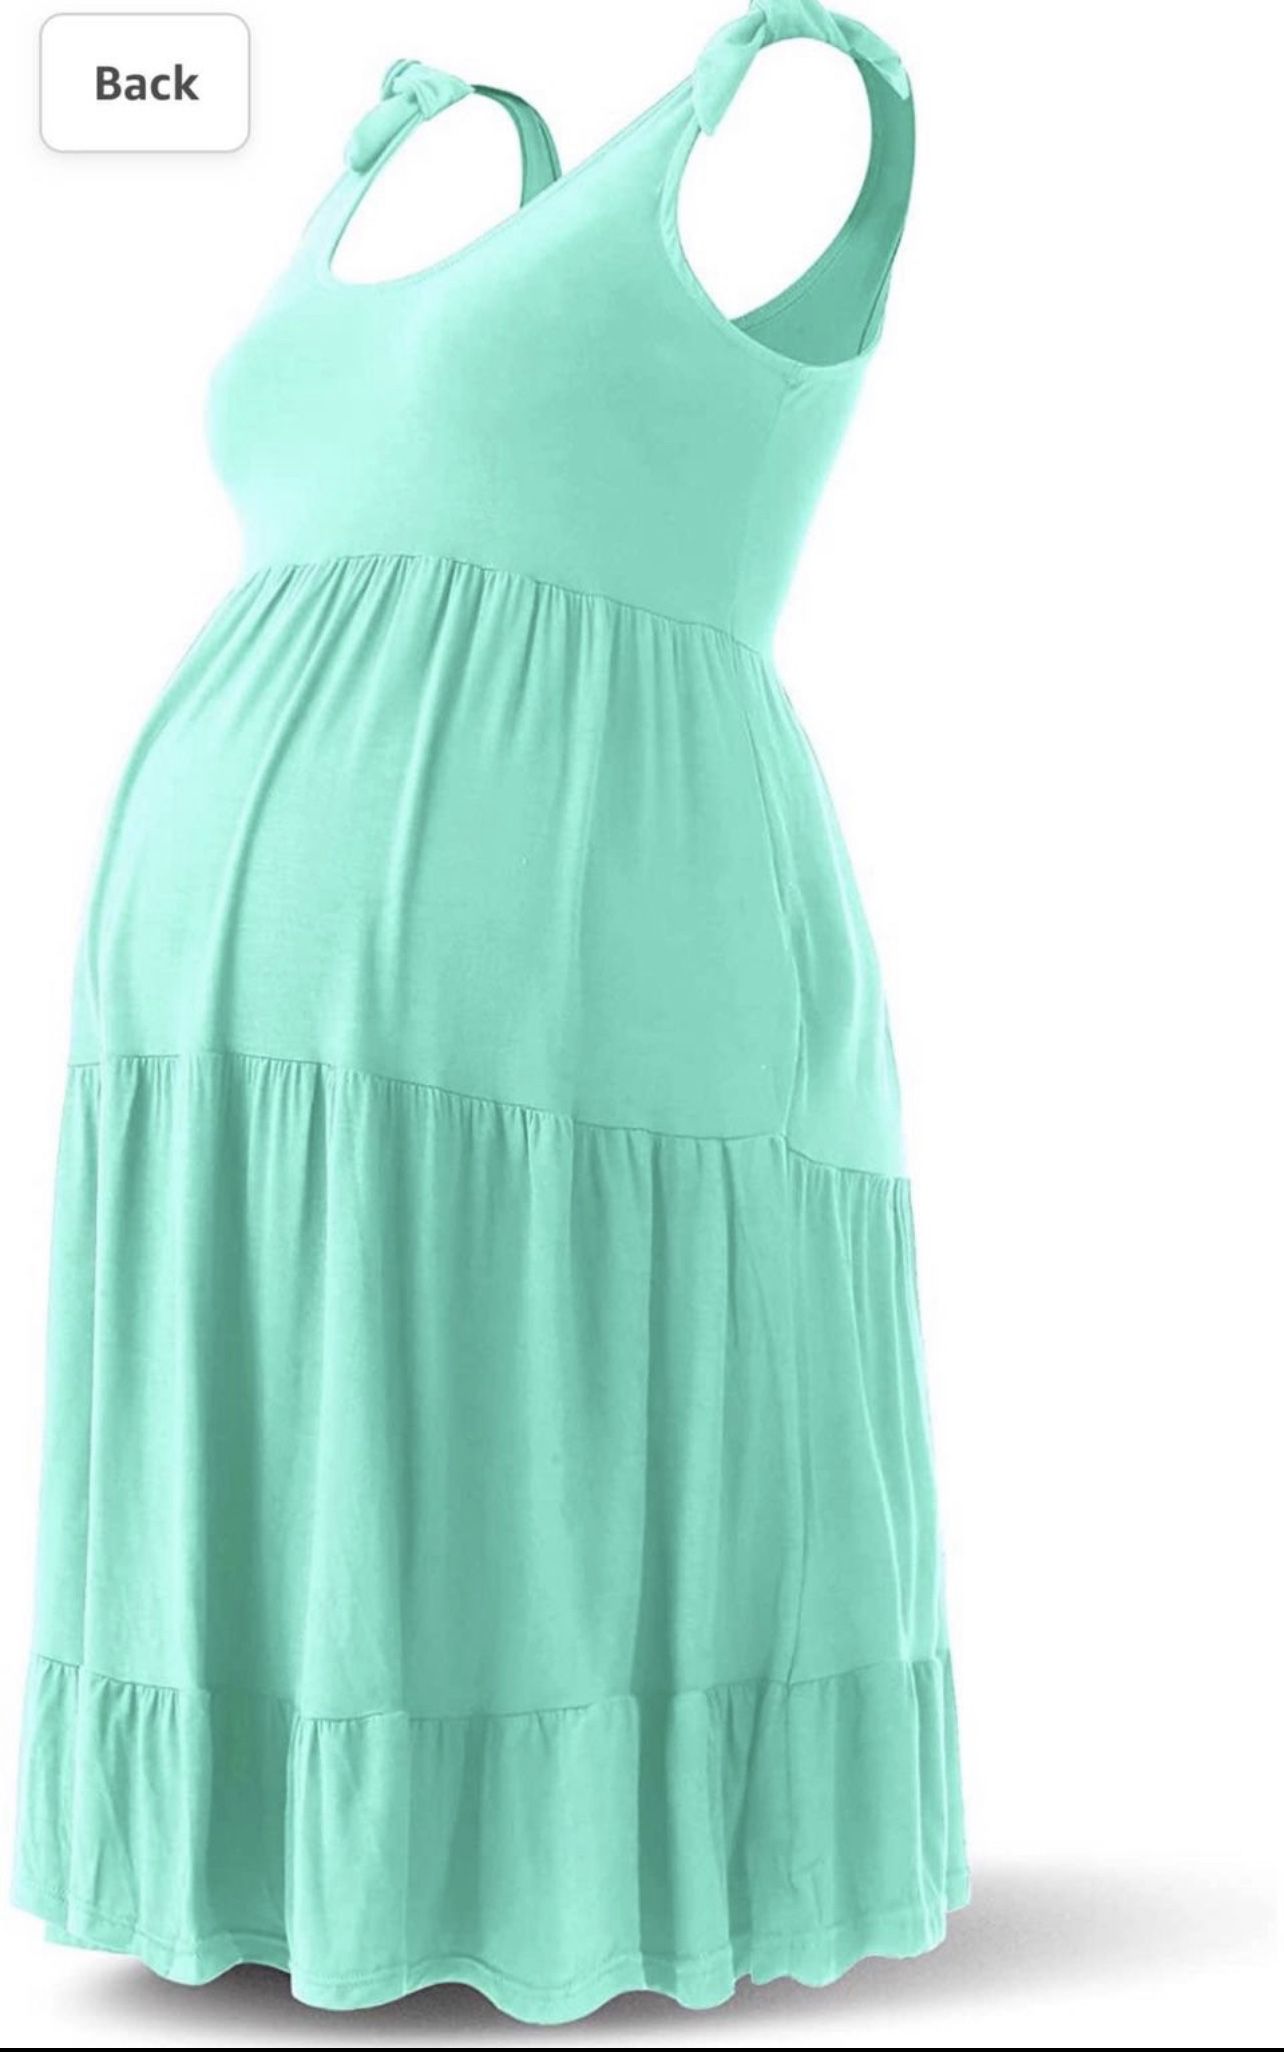 Brandnew Summer Maternity Dress Casual Sundress/Short Sleeveless Maternity Tank Dresses Cloth-Small